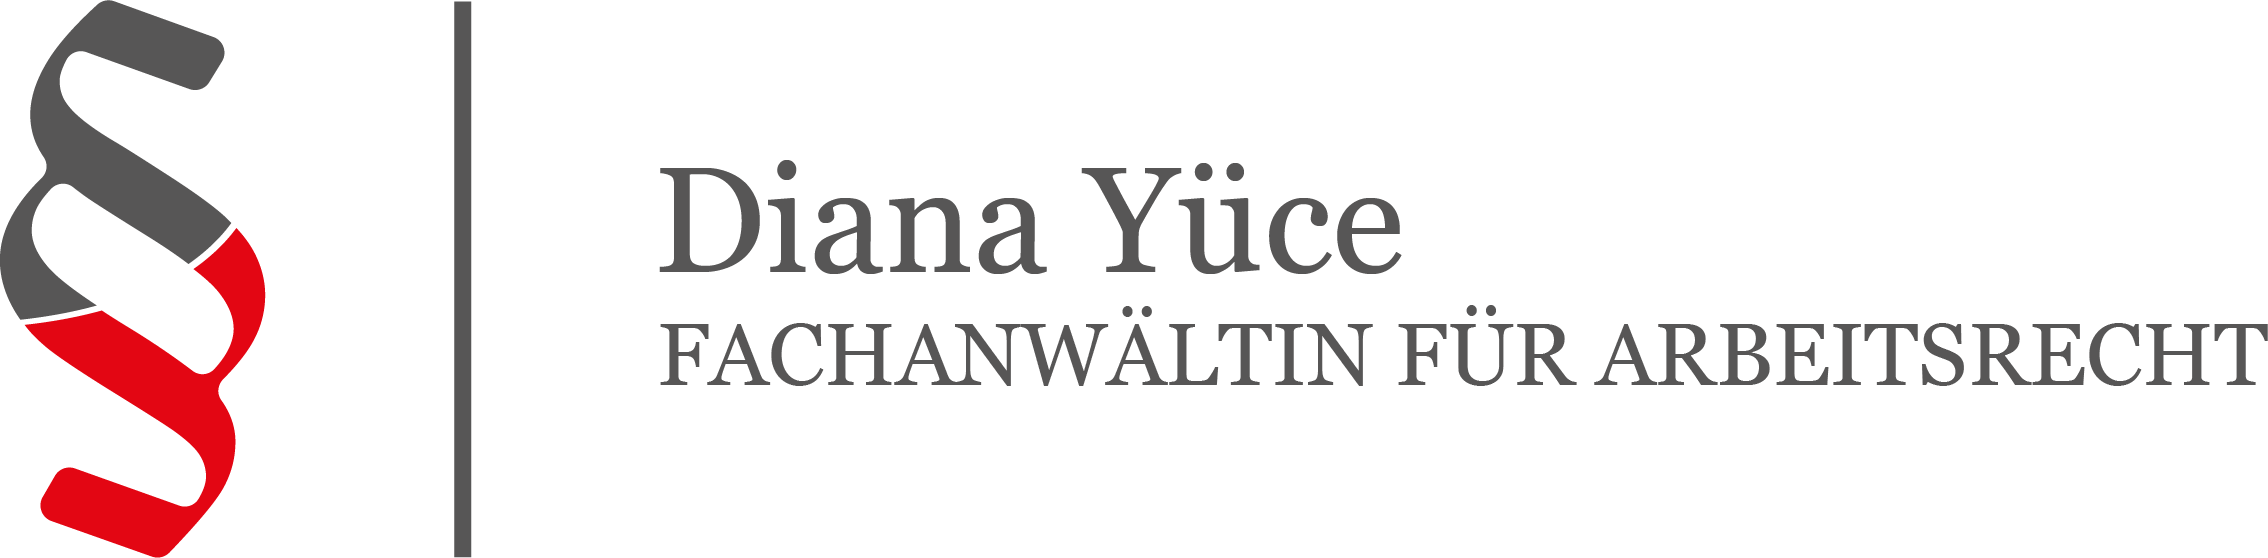 Diana_Yuece_Logo